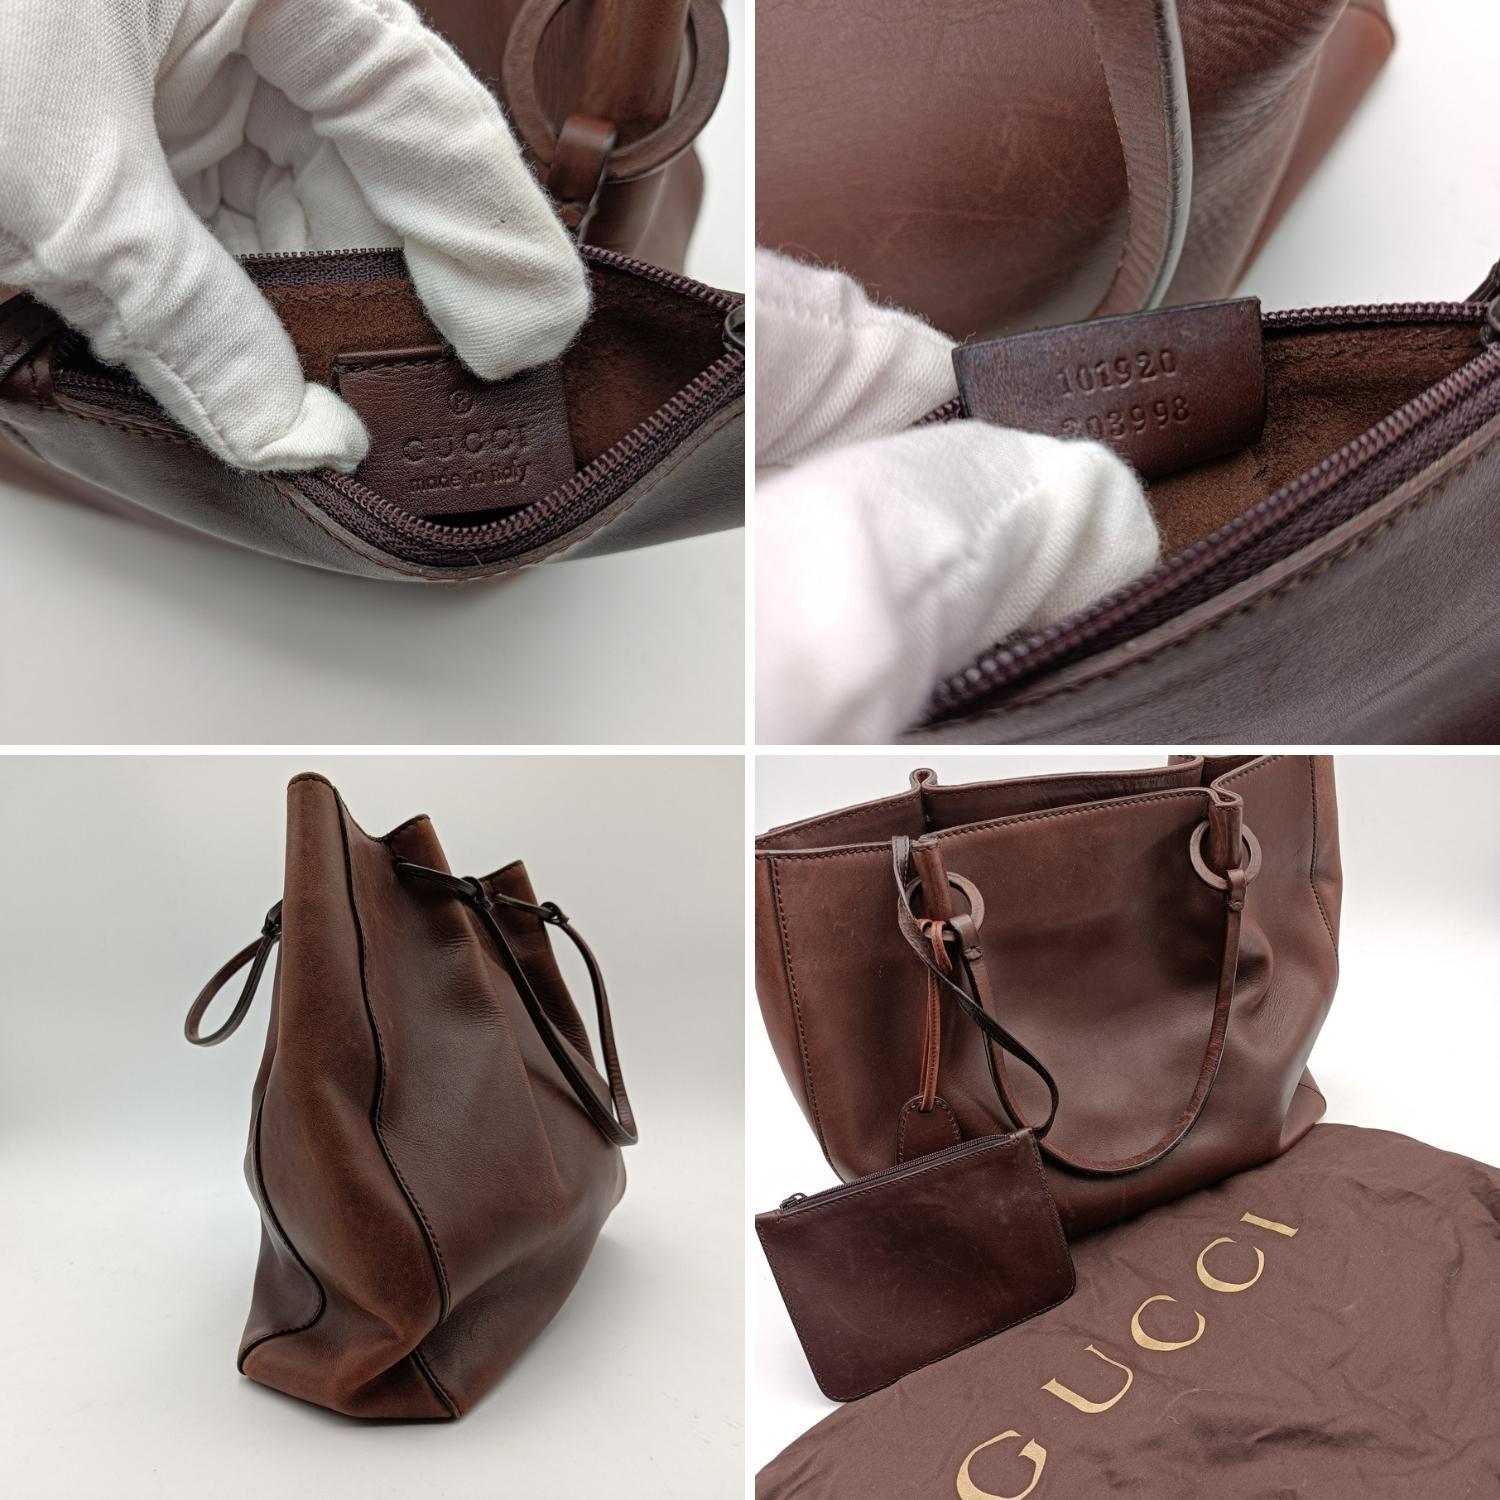 Gucci Brown Leather Tote Shopping Bag Handbag 4